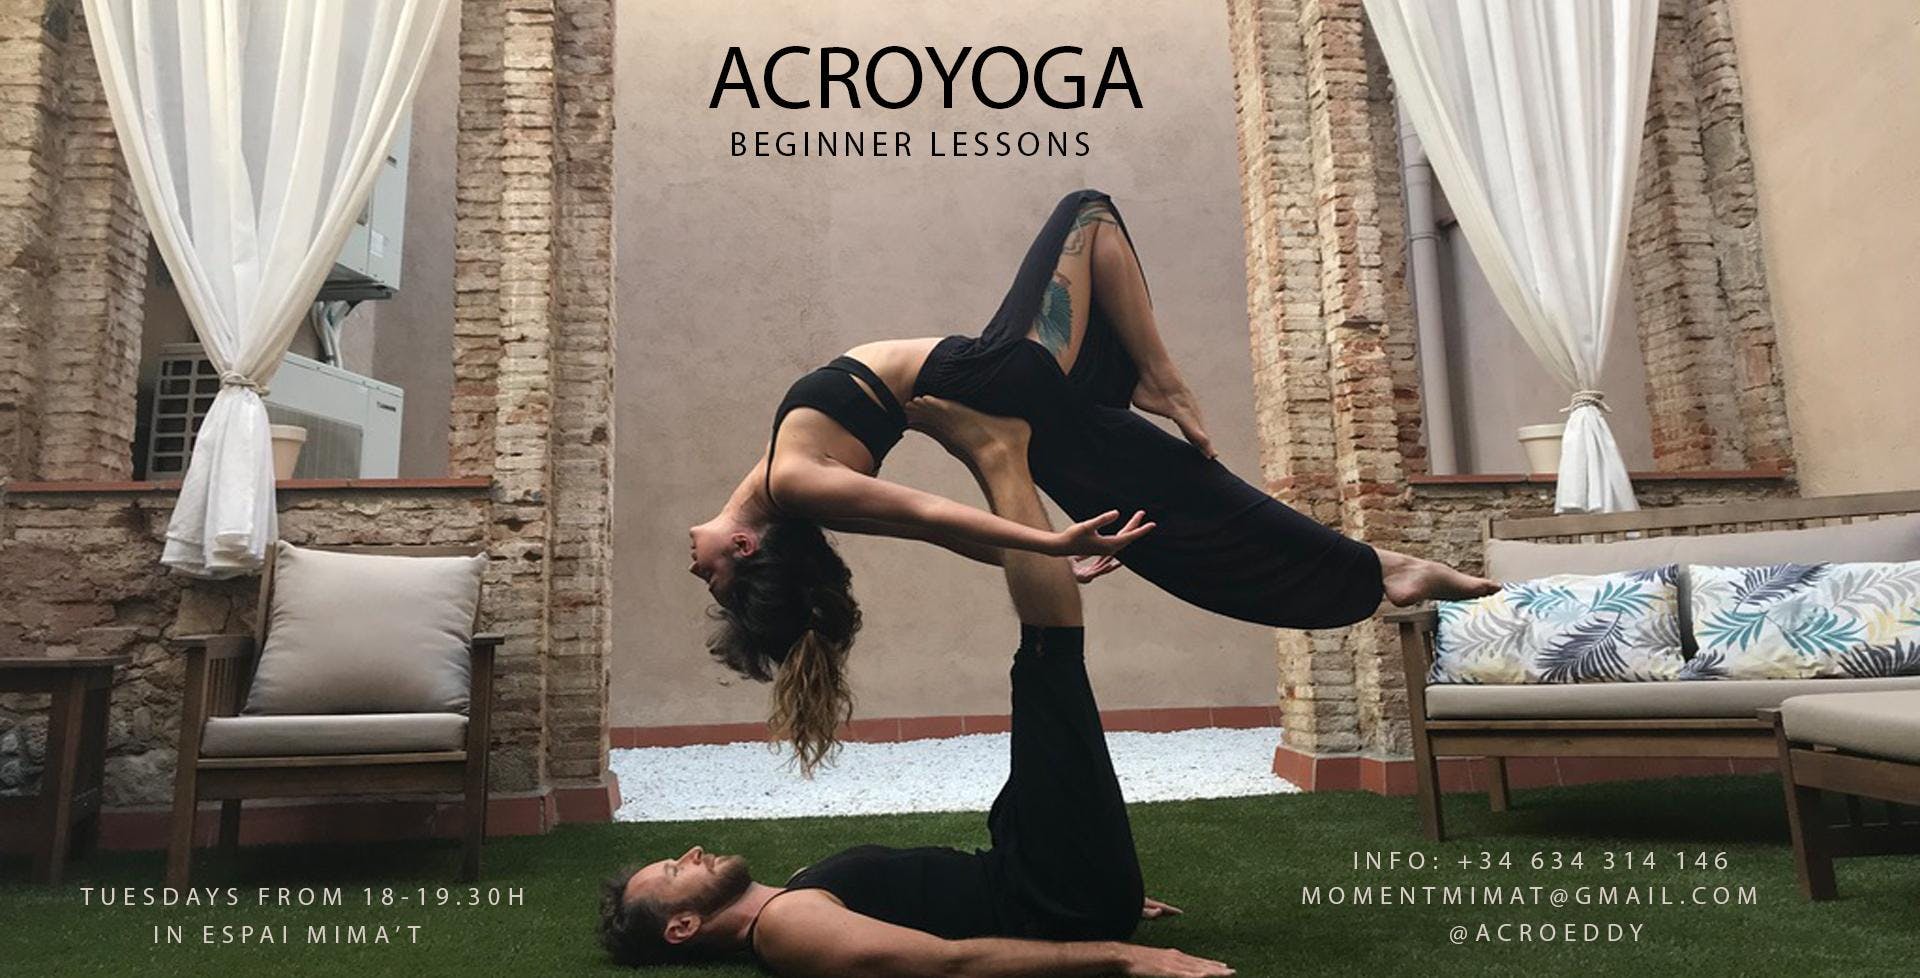 Acroyoga beginner lessons / Clases de iniciación al Acroyoga